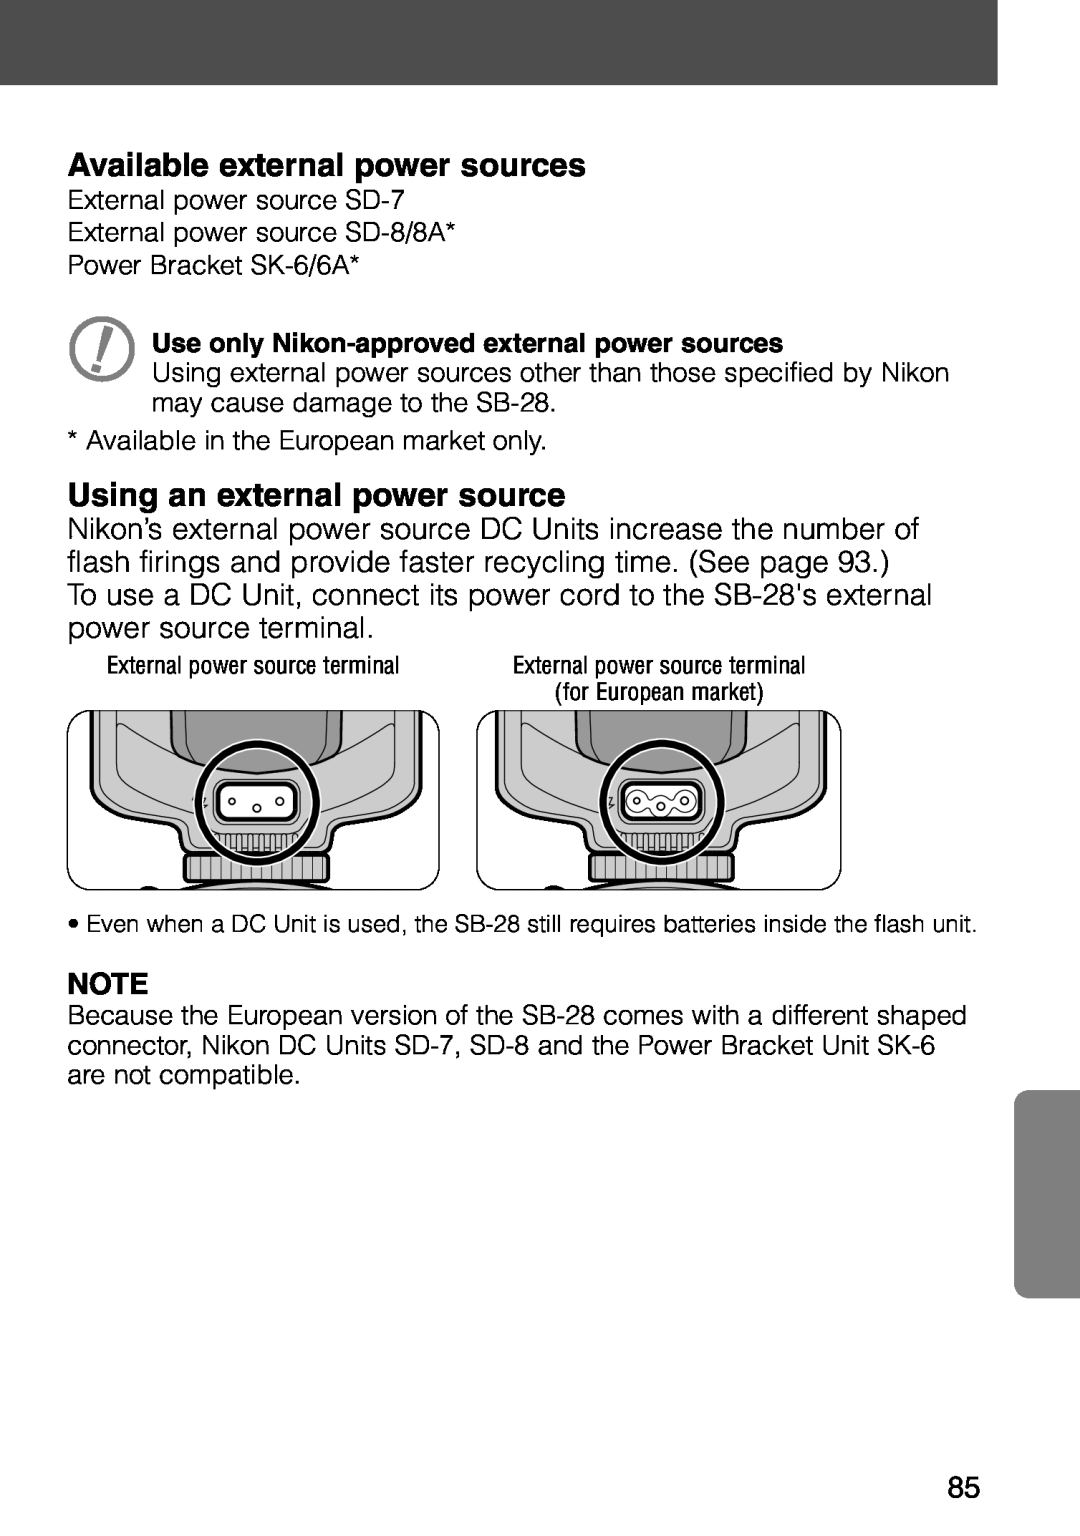 Nikon SB-28 instruction manual Available external power sources, Using an external power source 